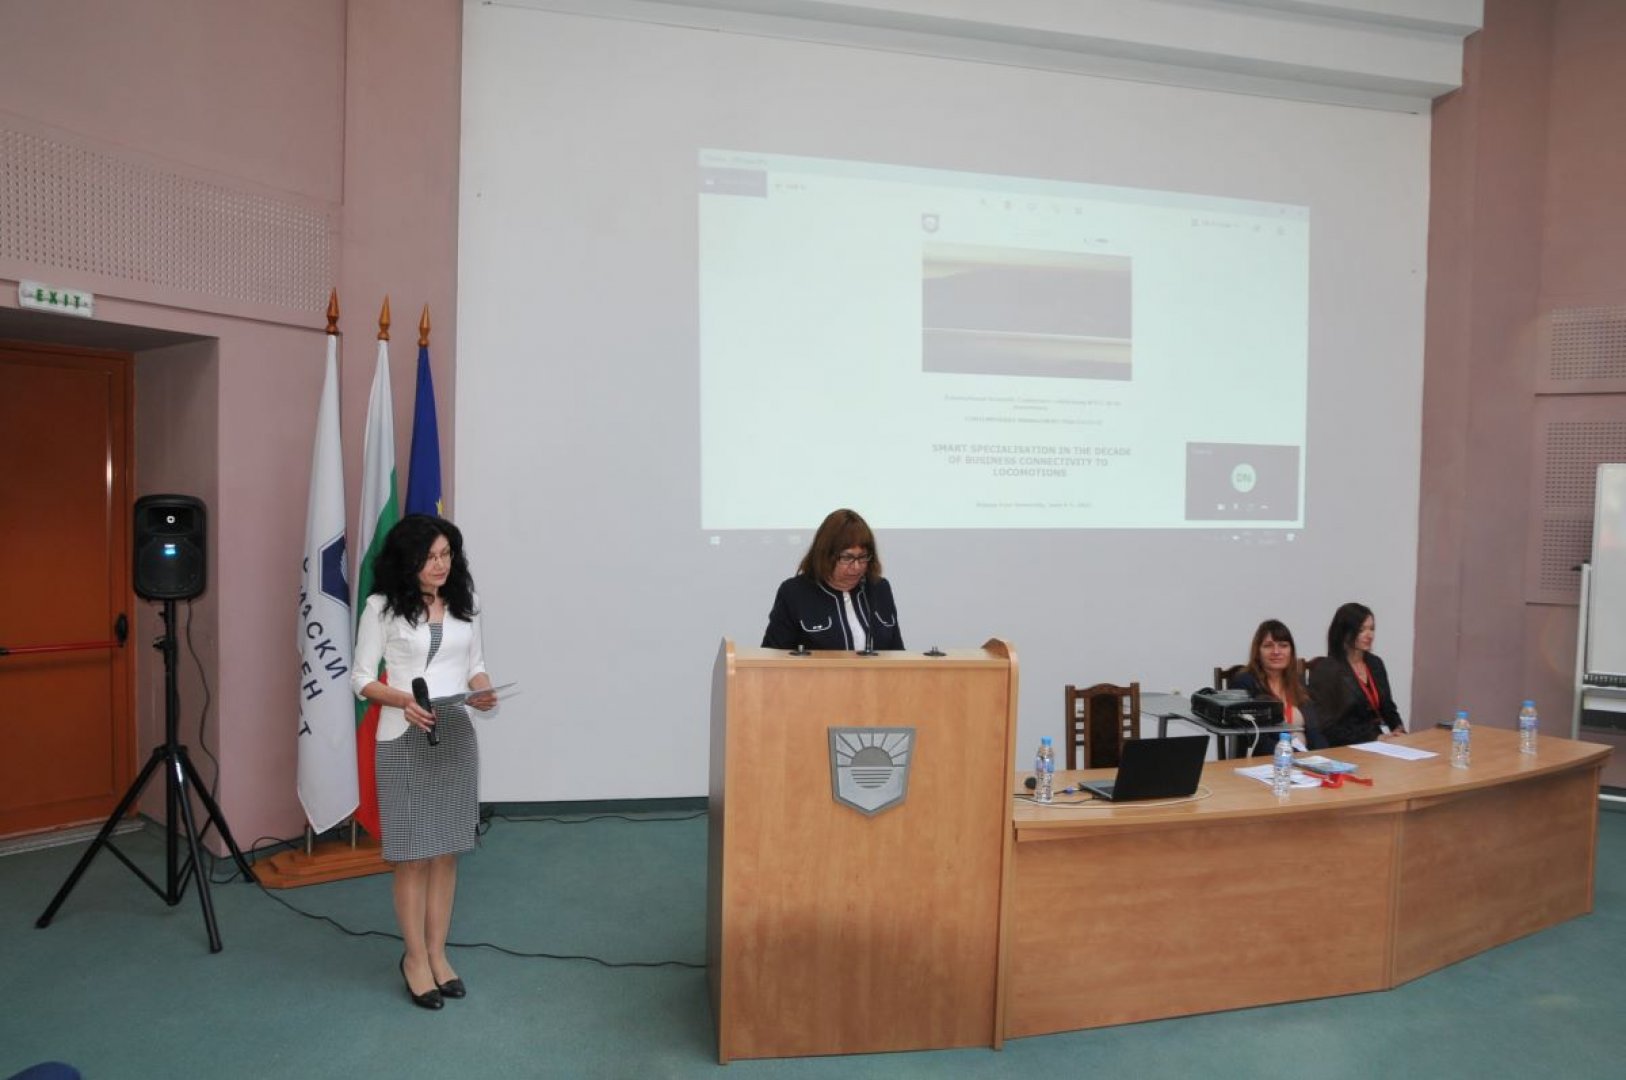 БСУ домакин на международна научнаконференция (Снимки) - E-Burgas.com